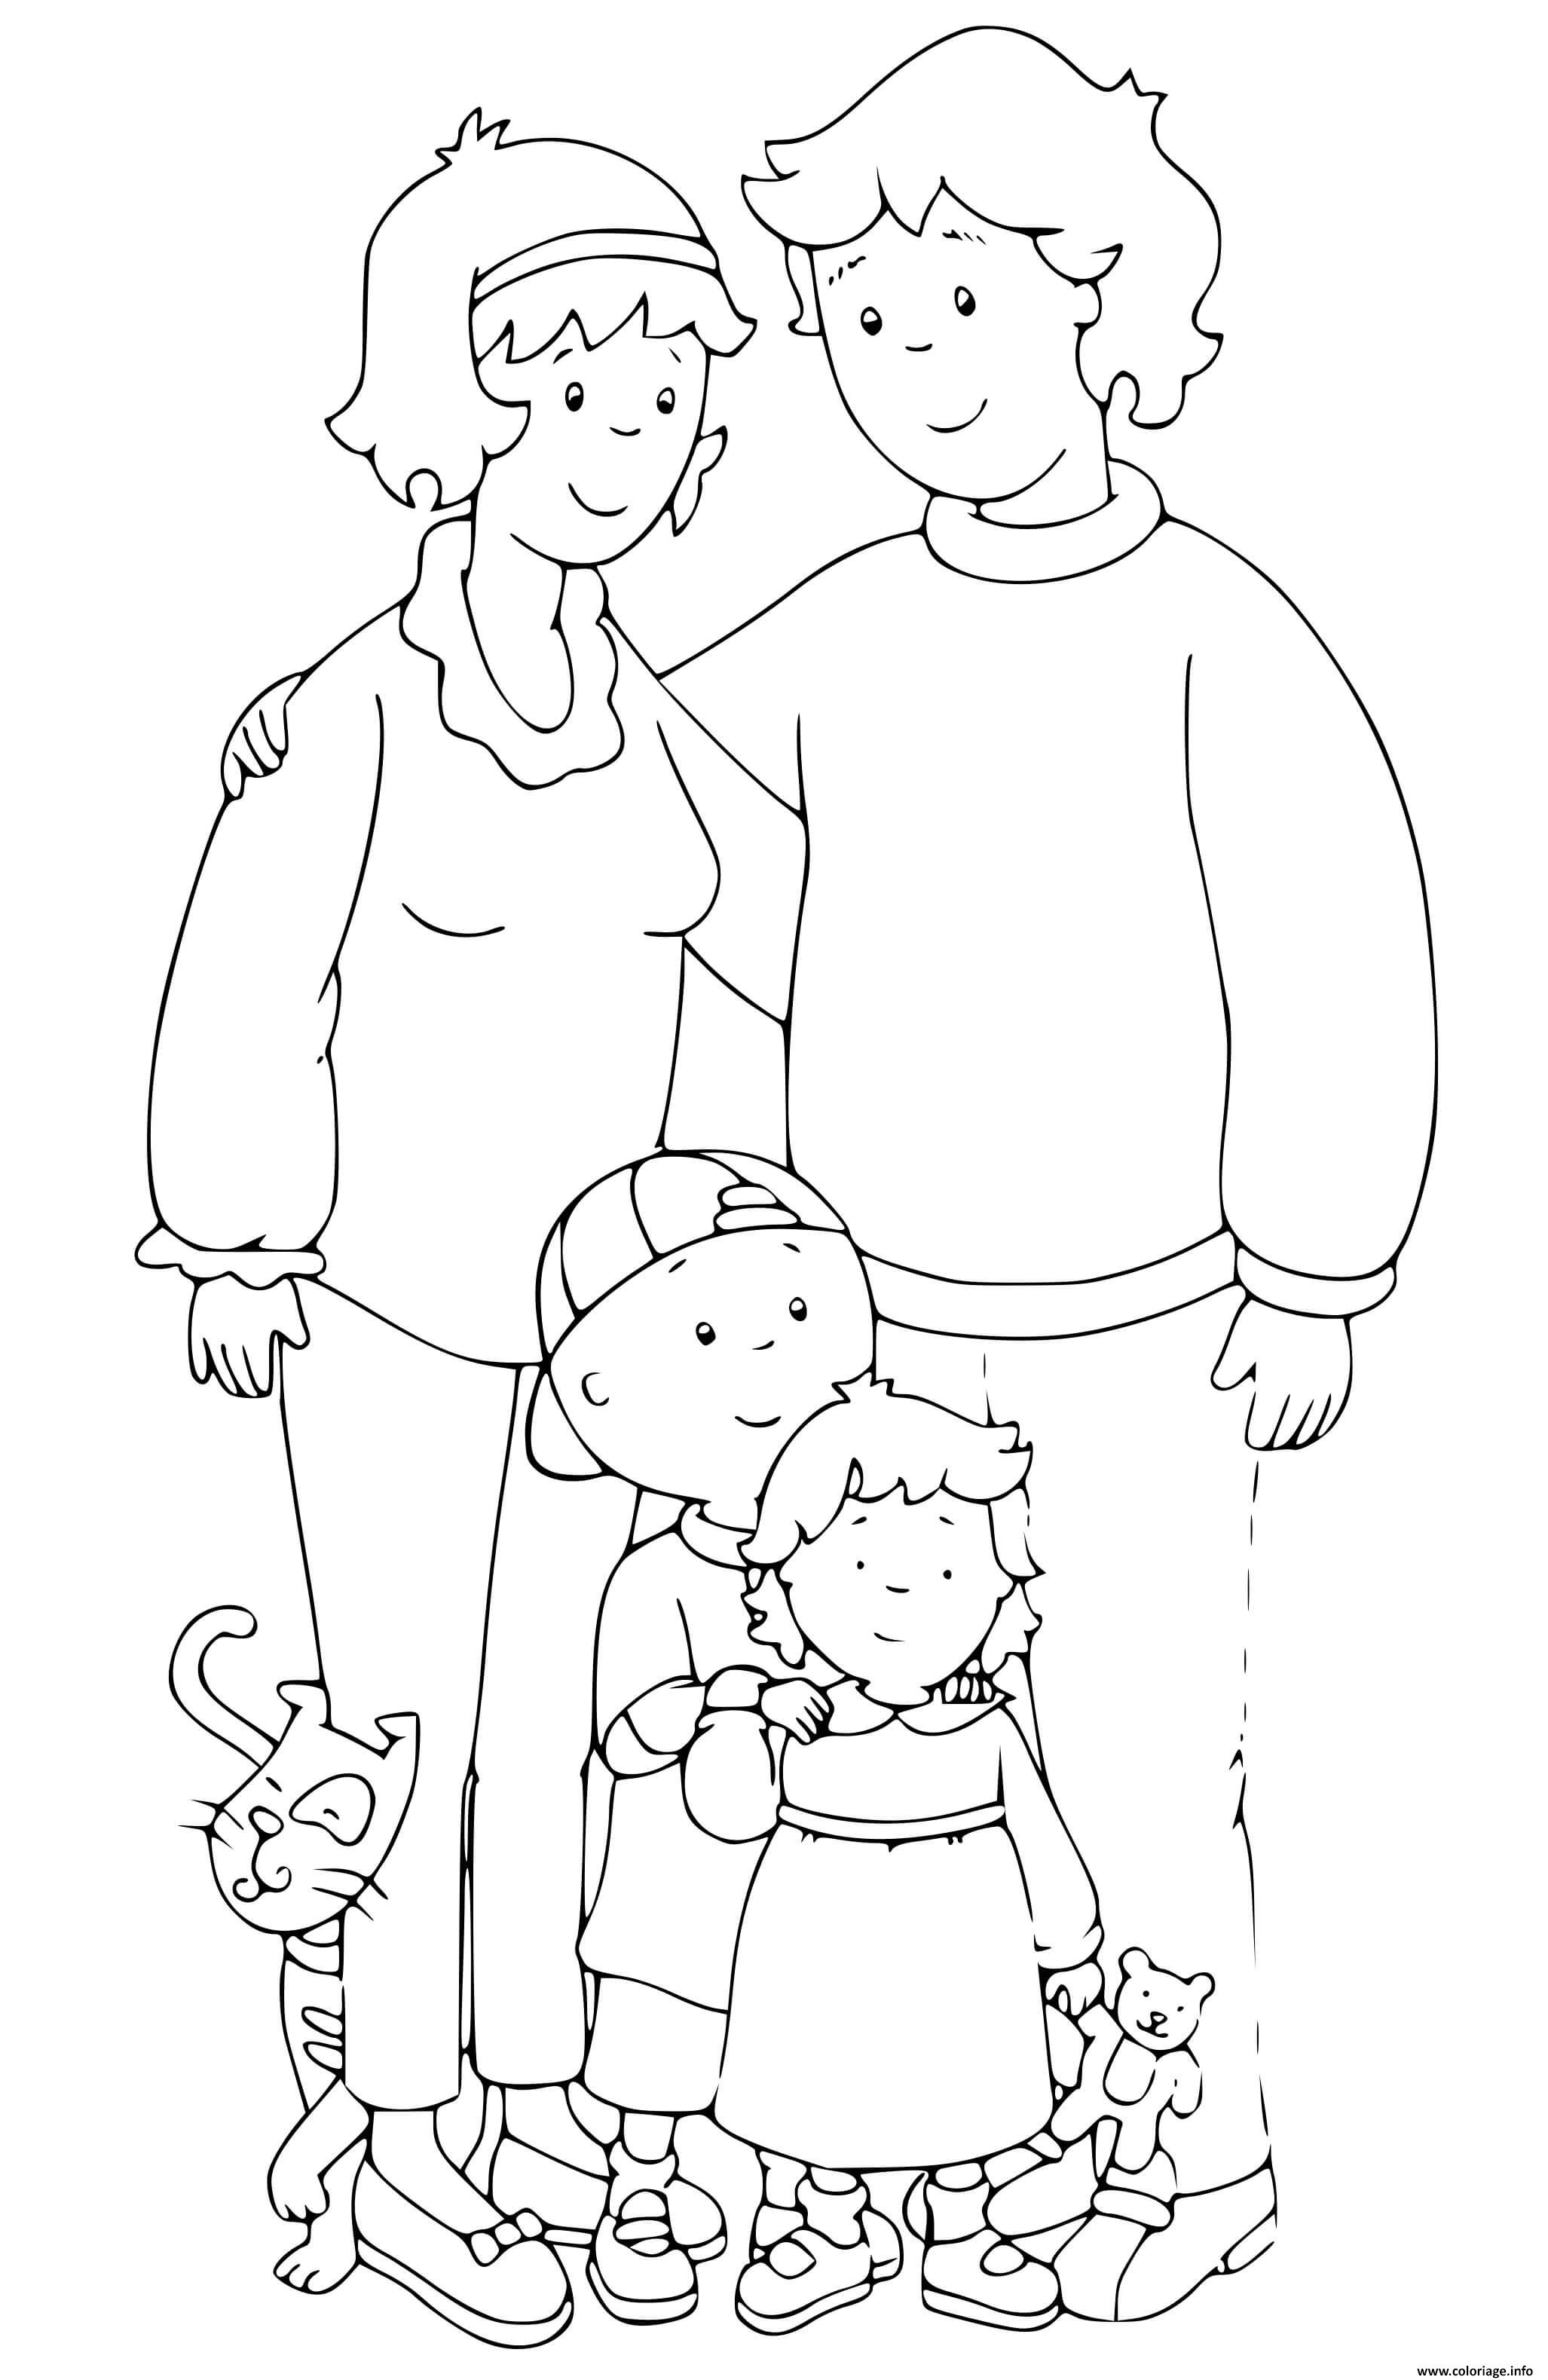 Раскраски семья для детей 6 7 лет. Раскраска семья. Раскраска "моя семья". Семья рисунок. Семья раскраска для детей.